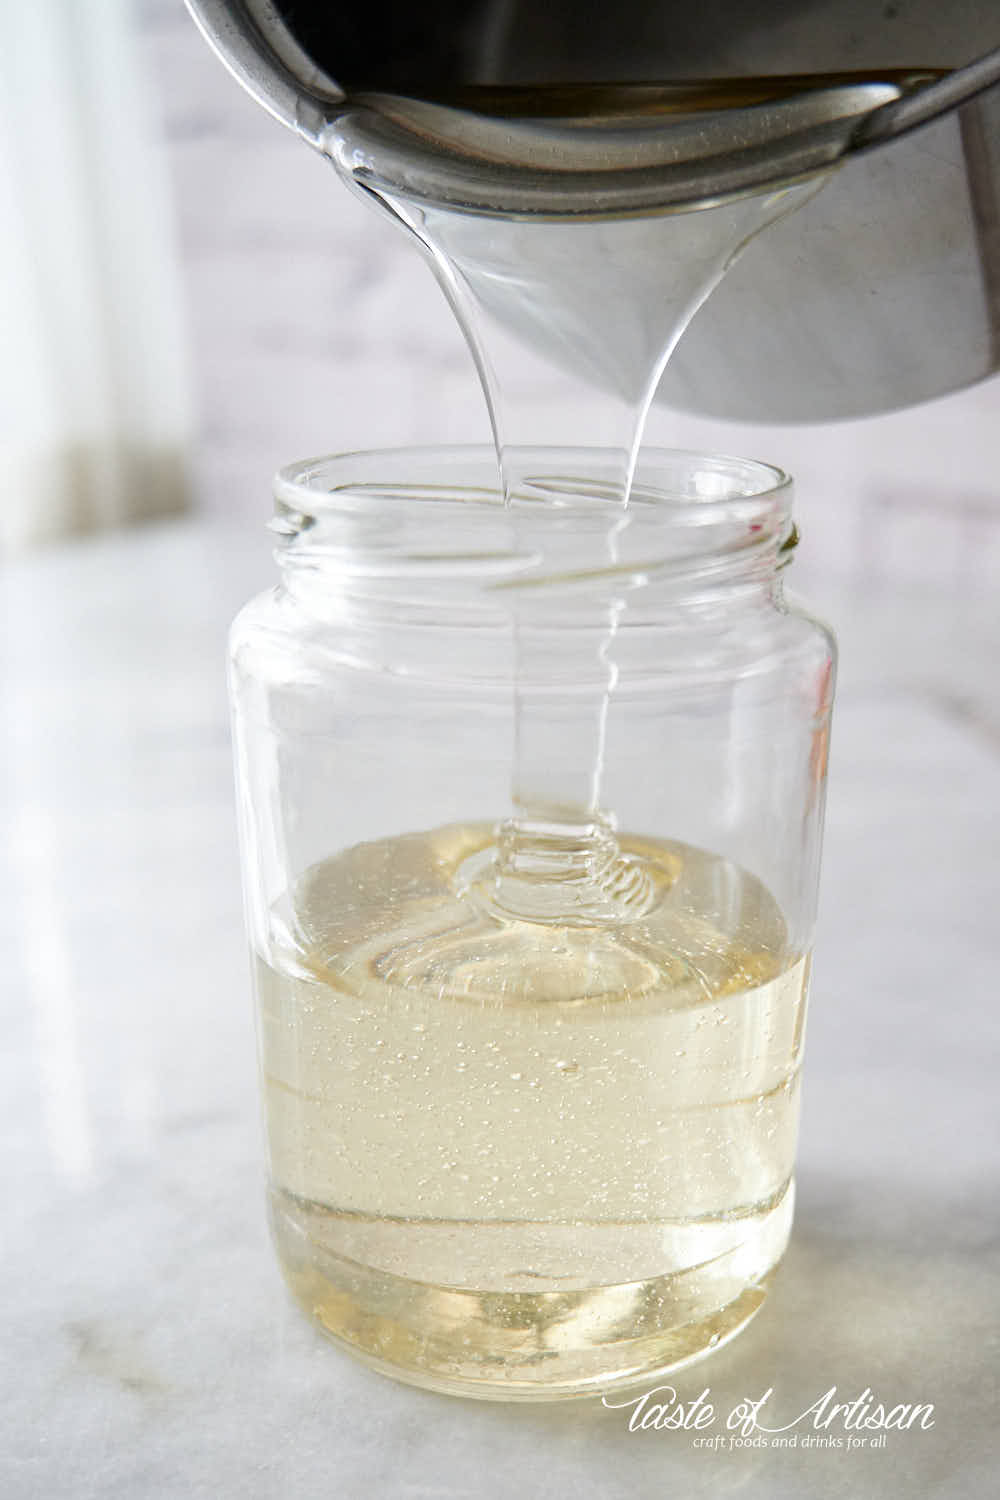 Pouring invert sugar in a jar.